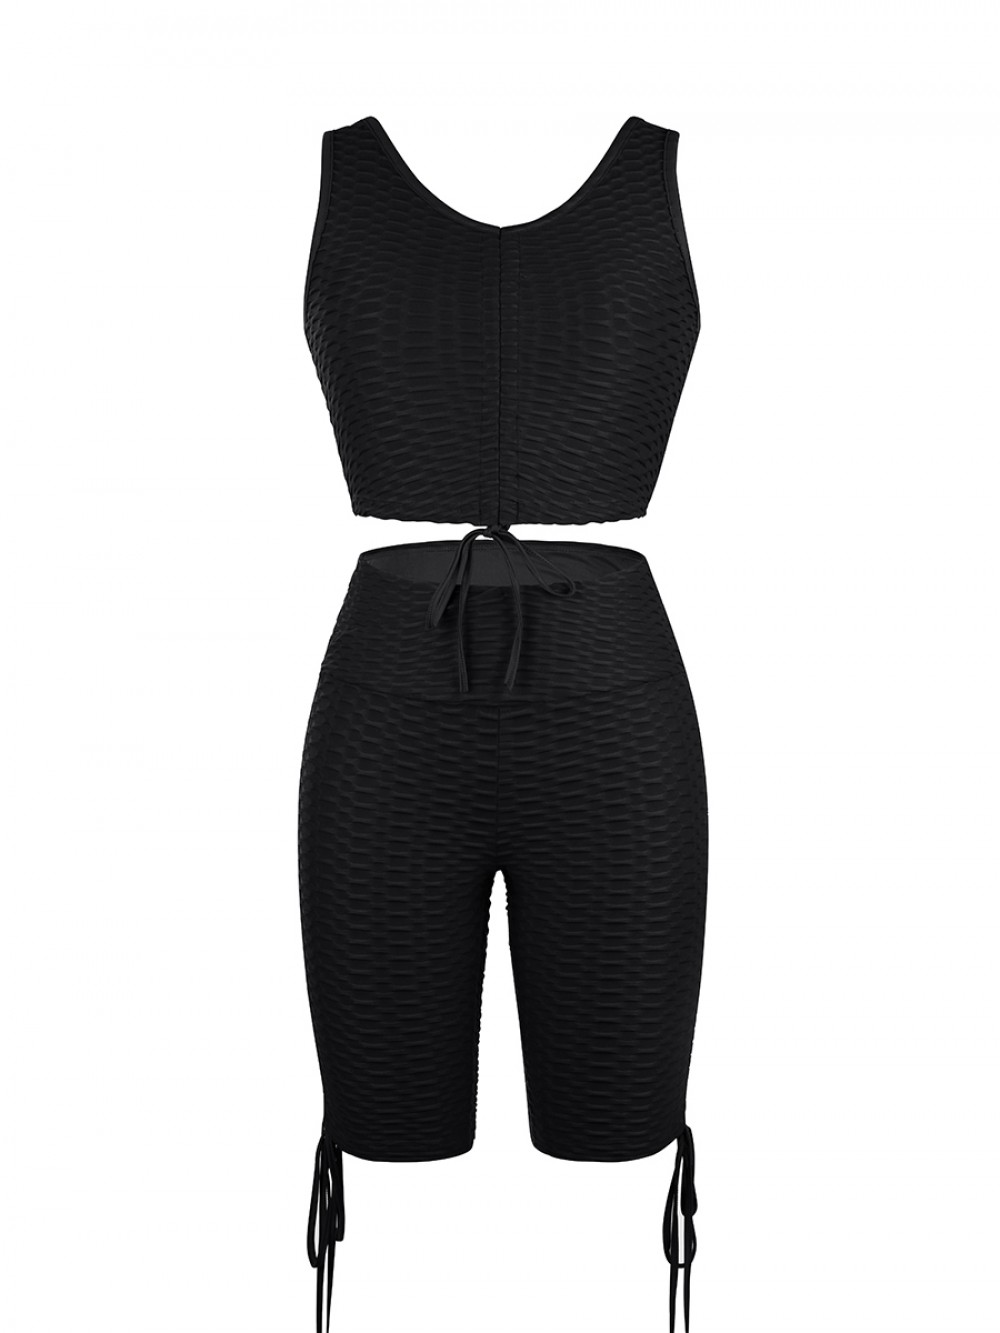 Black Drawstring Athletic Suit High Waist Workout Activewear